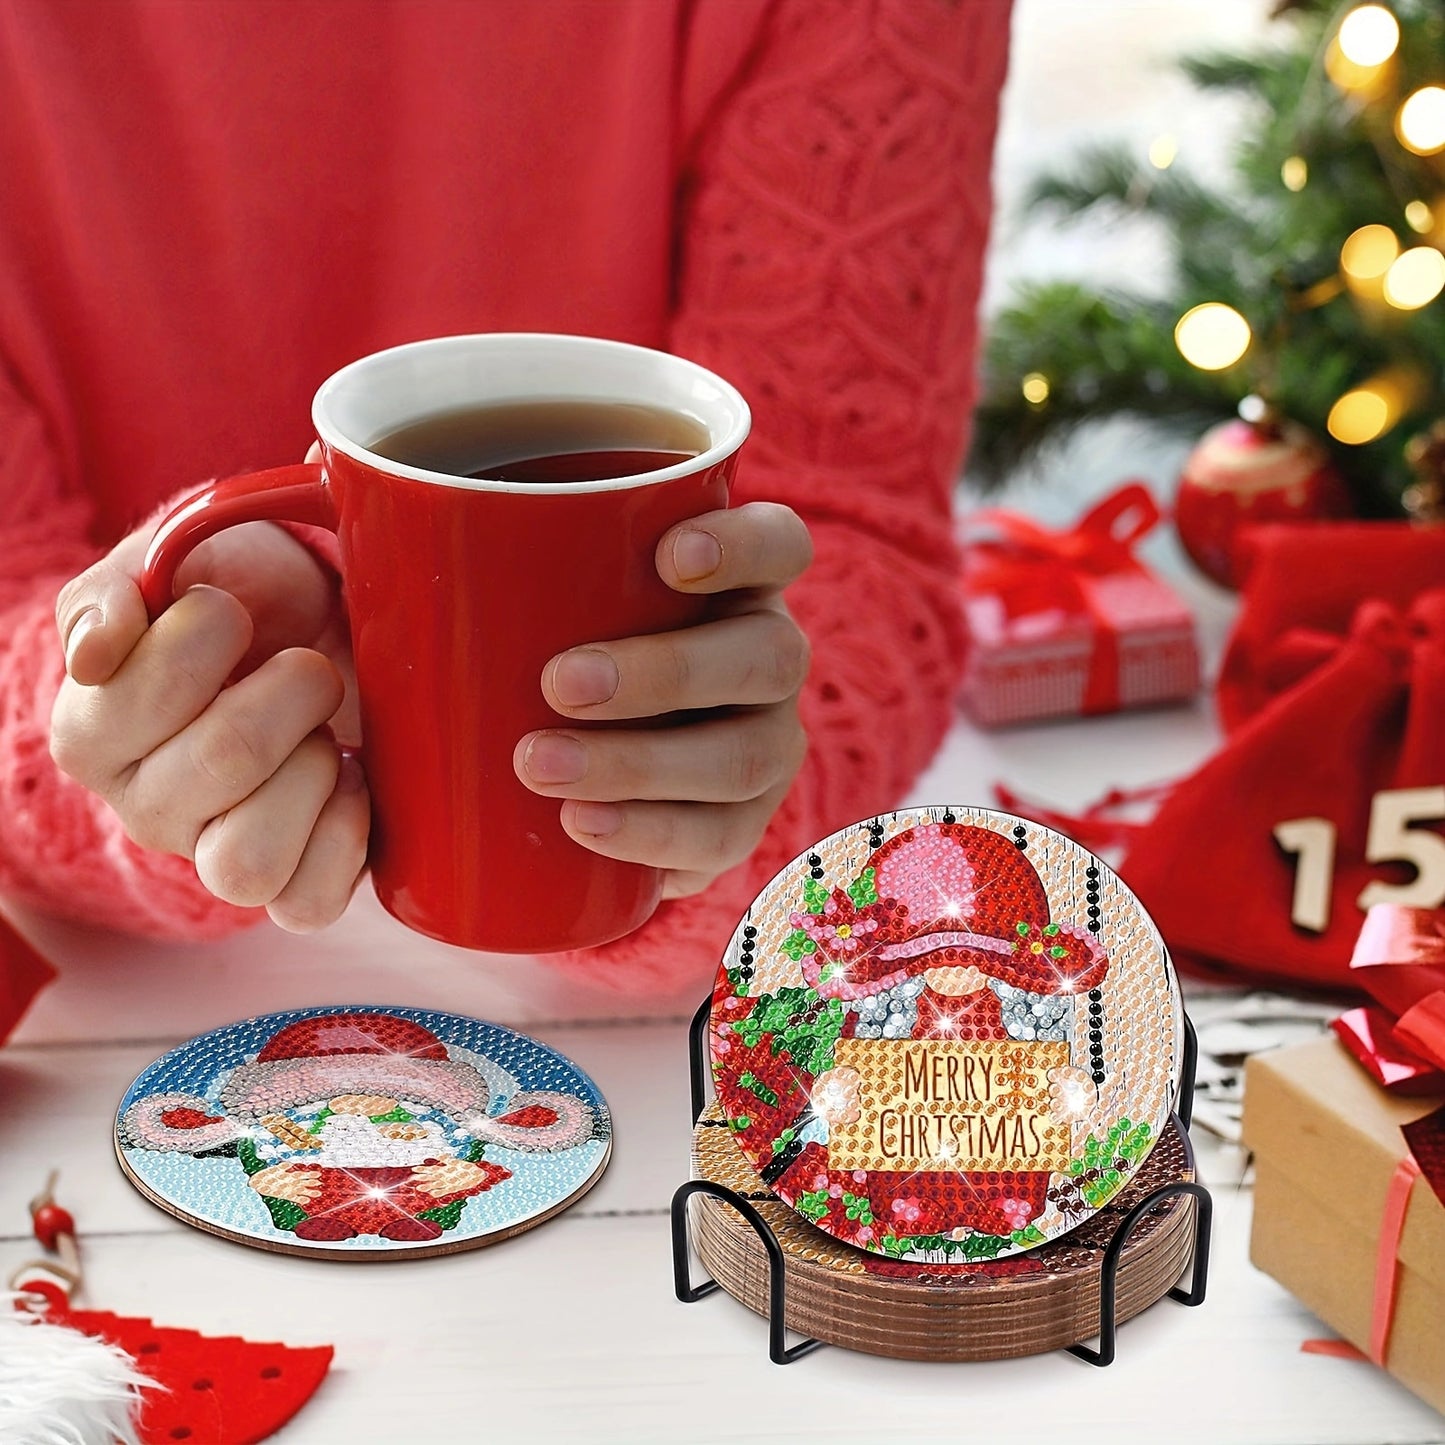 8 pcs set DIY Special Shaped Diamond Painting Coaster | Christmas（no holder）